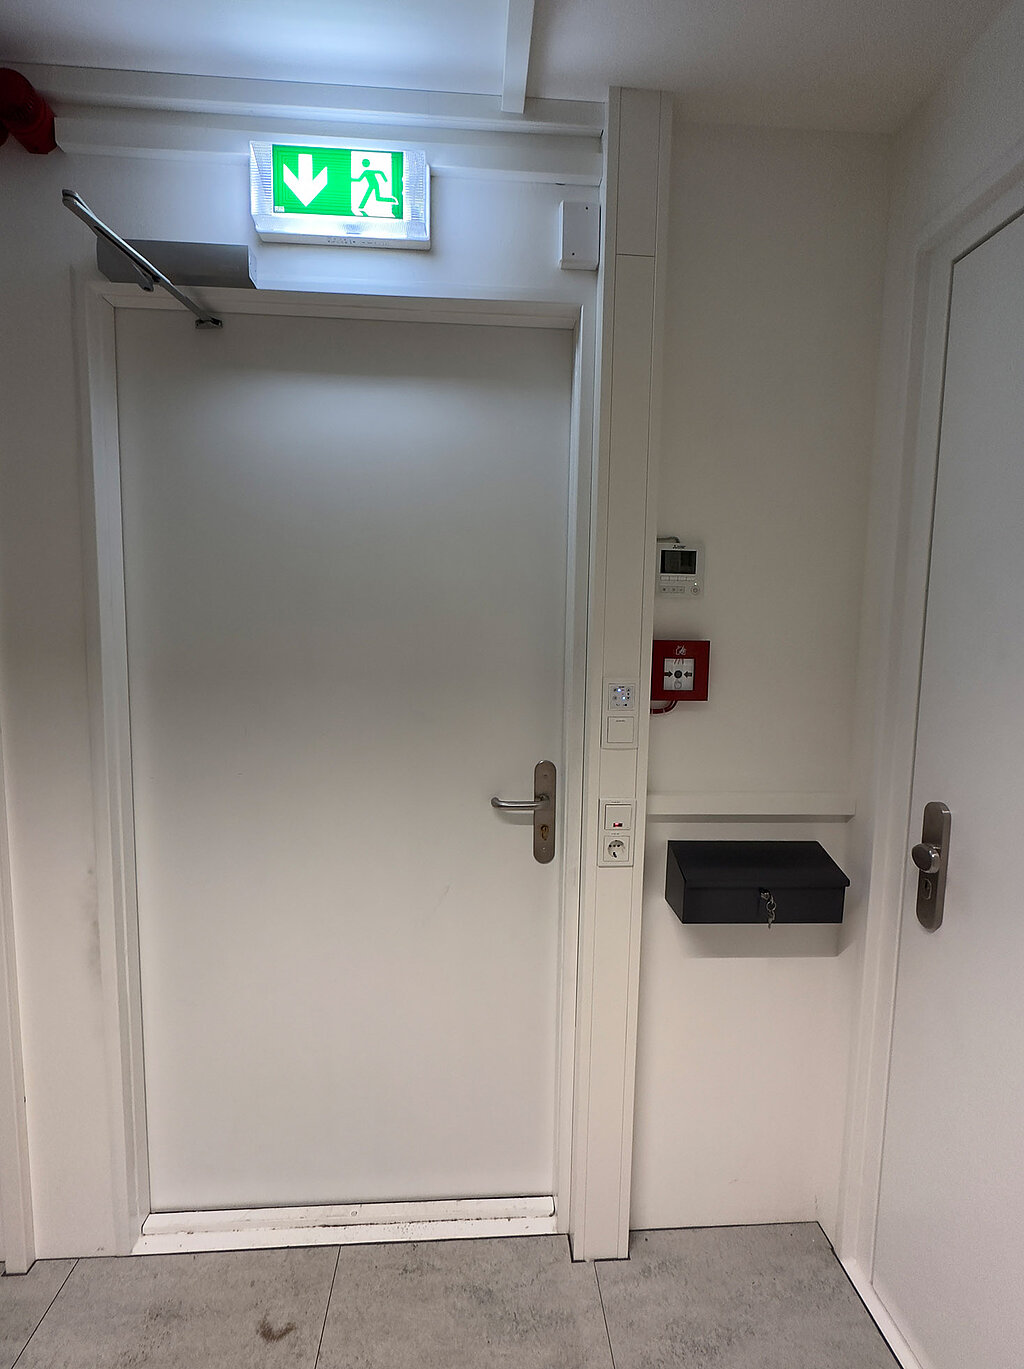 Door to server room with exit sign above it